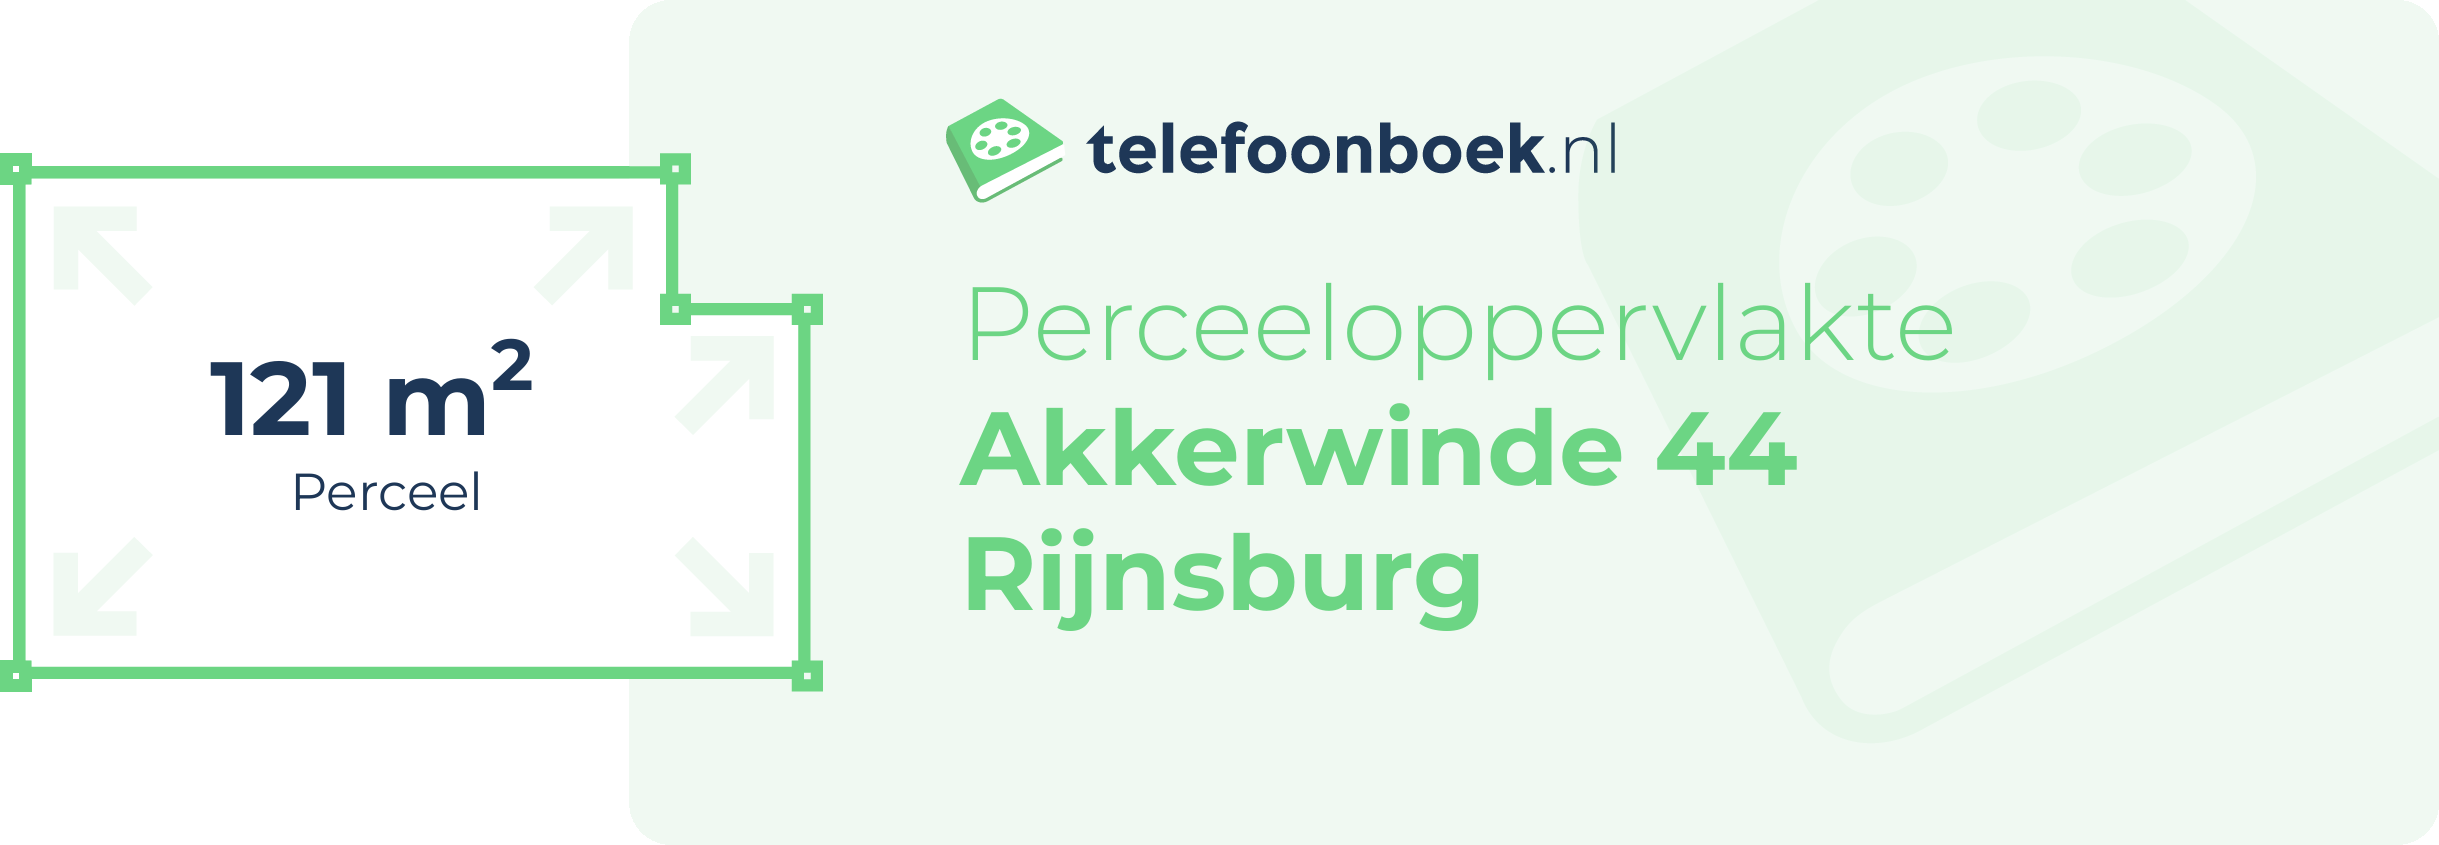 Perceeloppervlakte Akkerwinde 44 Rijnsburg